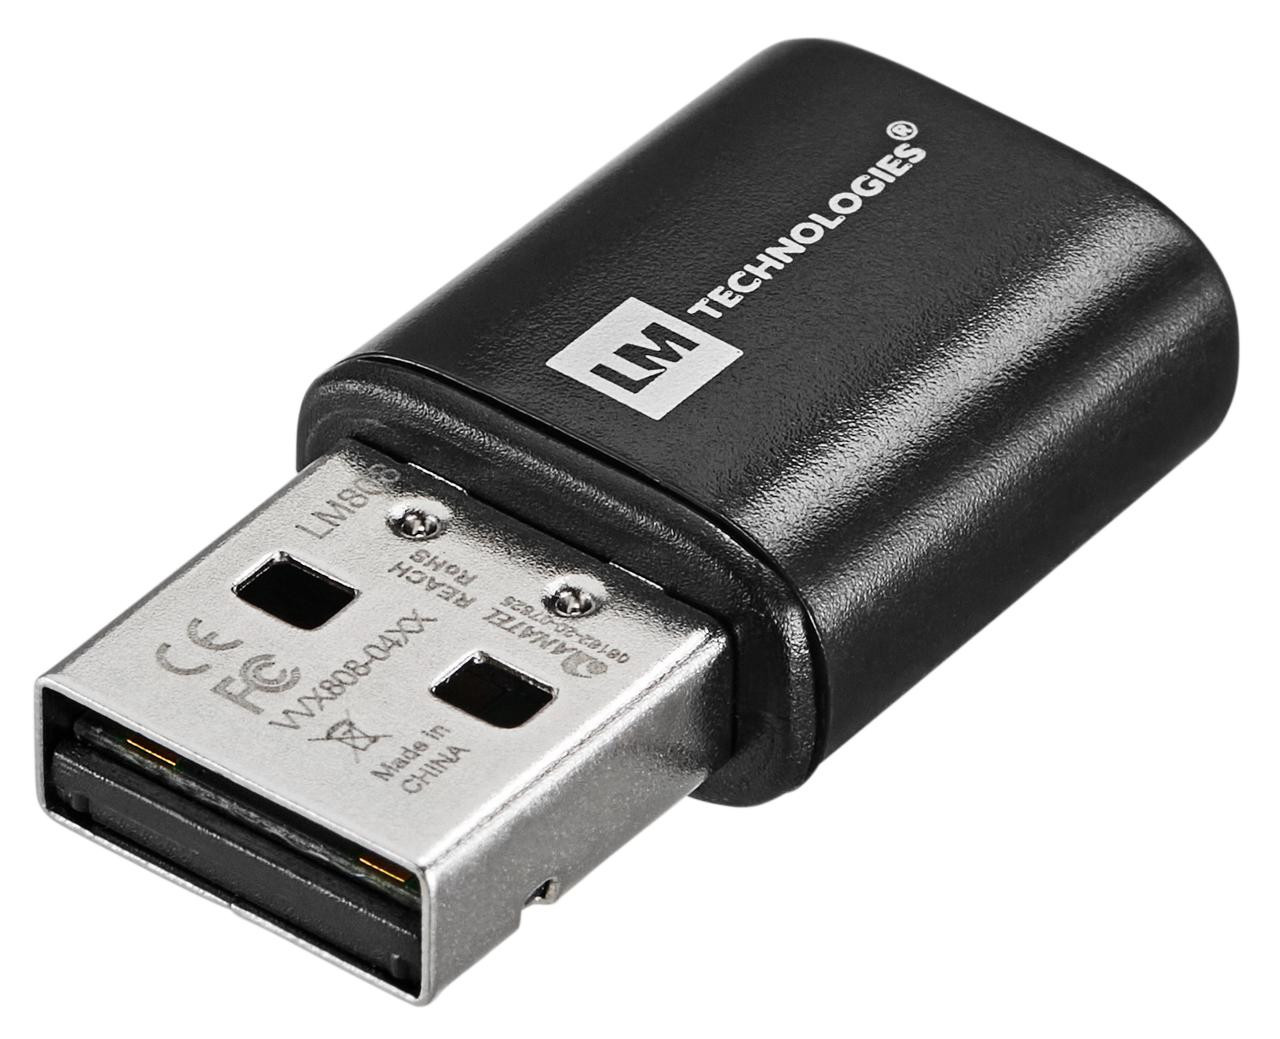  Blum MZD.5500 WLAN USB adapter for EASYSTICK computer (HMI) Item Number 06628877 